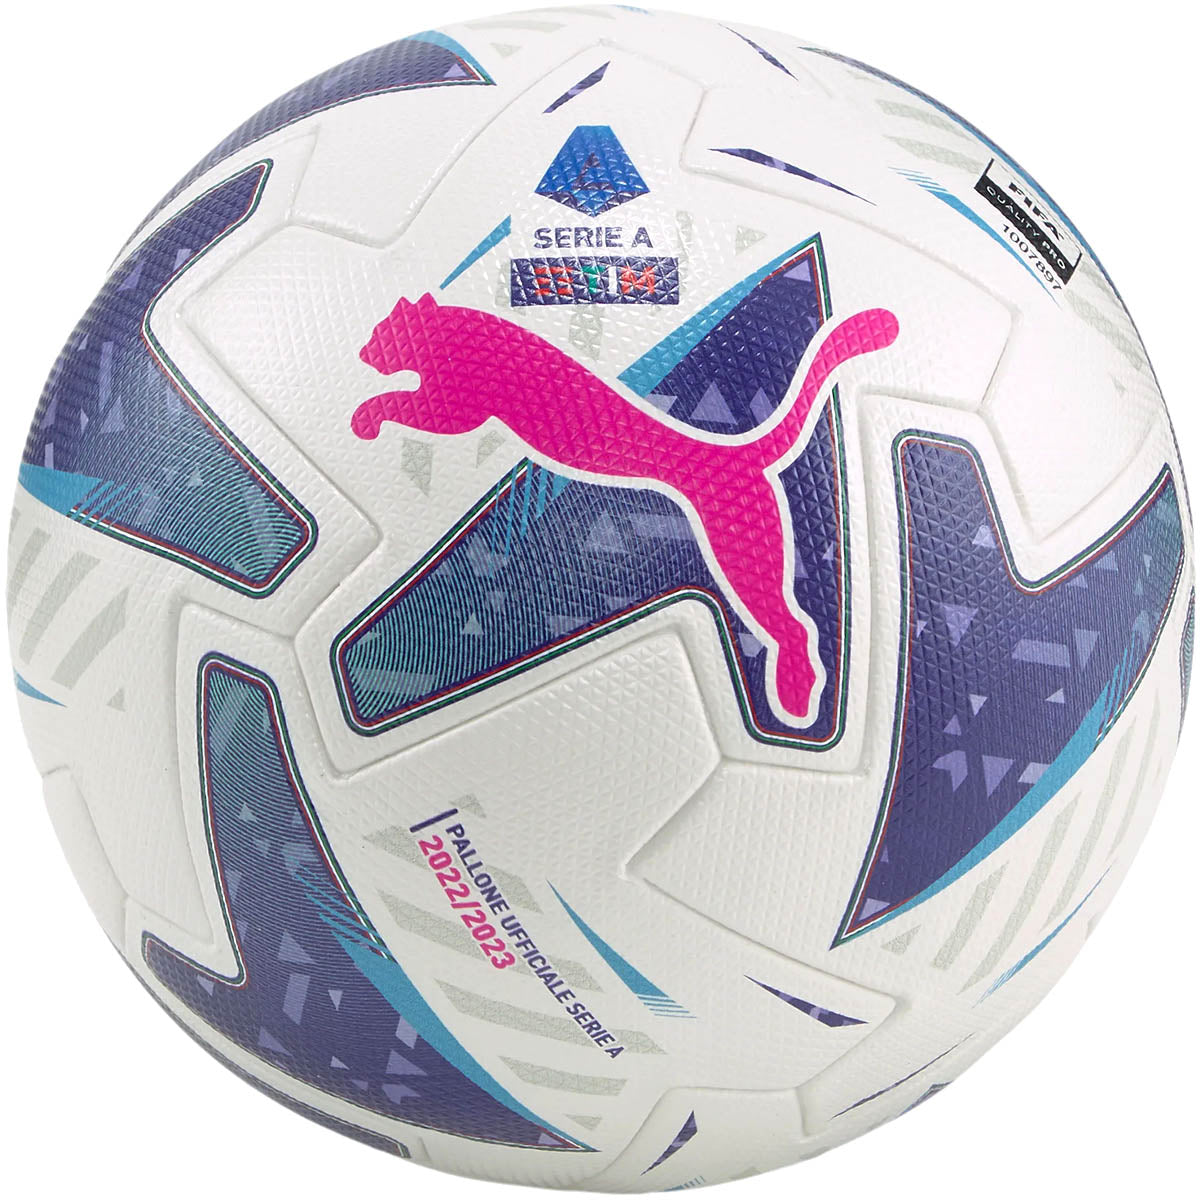 Puma Orbita Serie A FIFA Quality Pro | 08399901 Soccer Ball Puma 5 White 